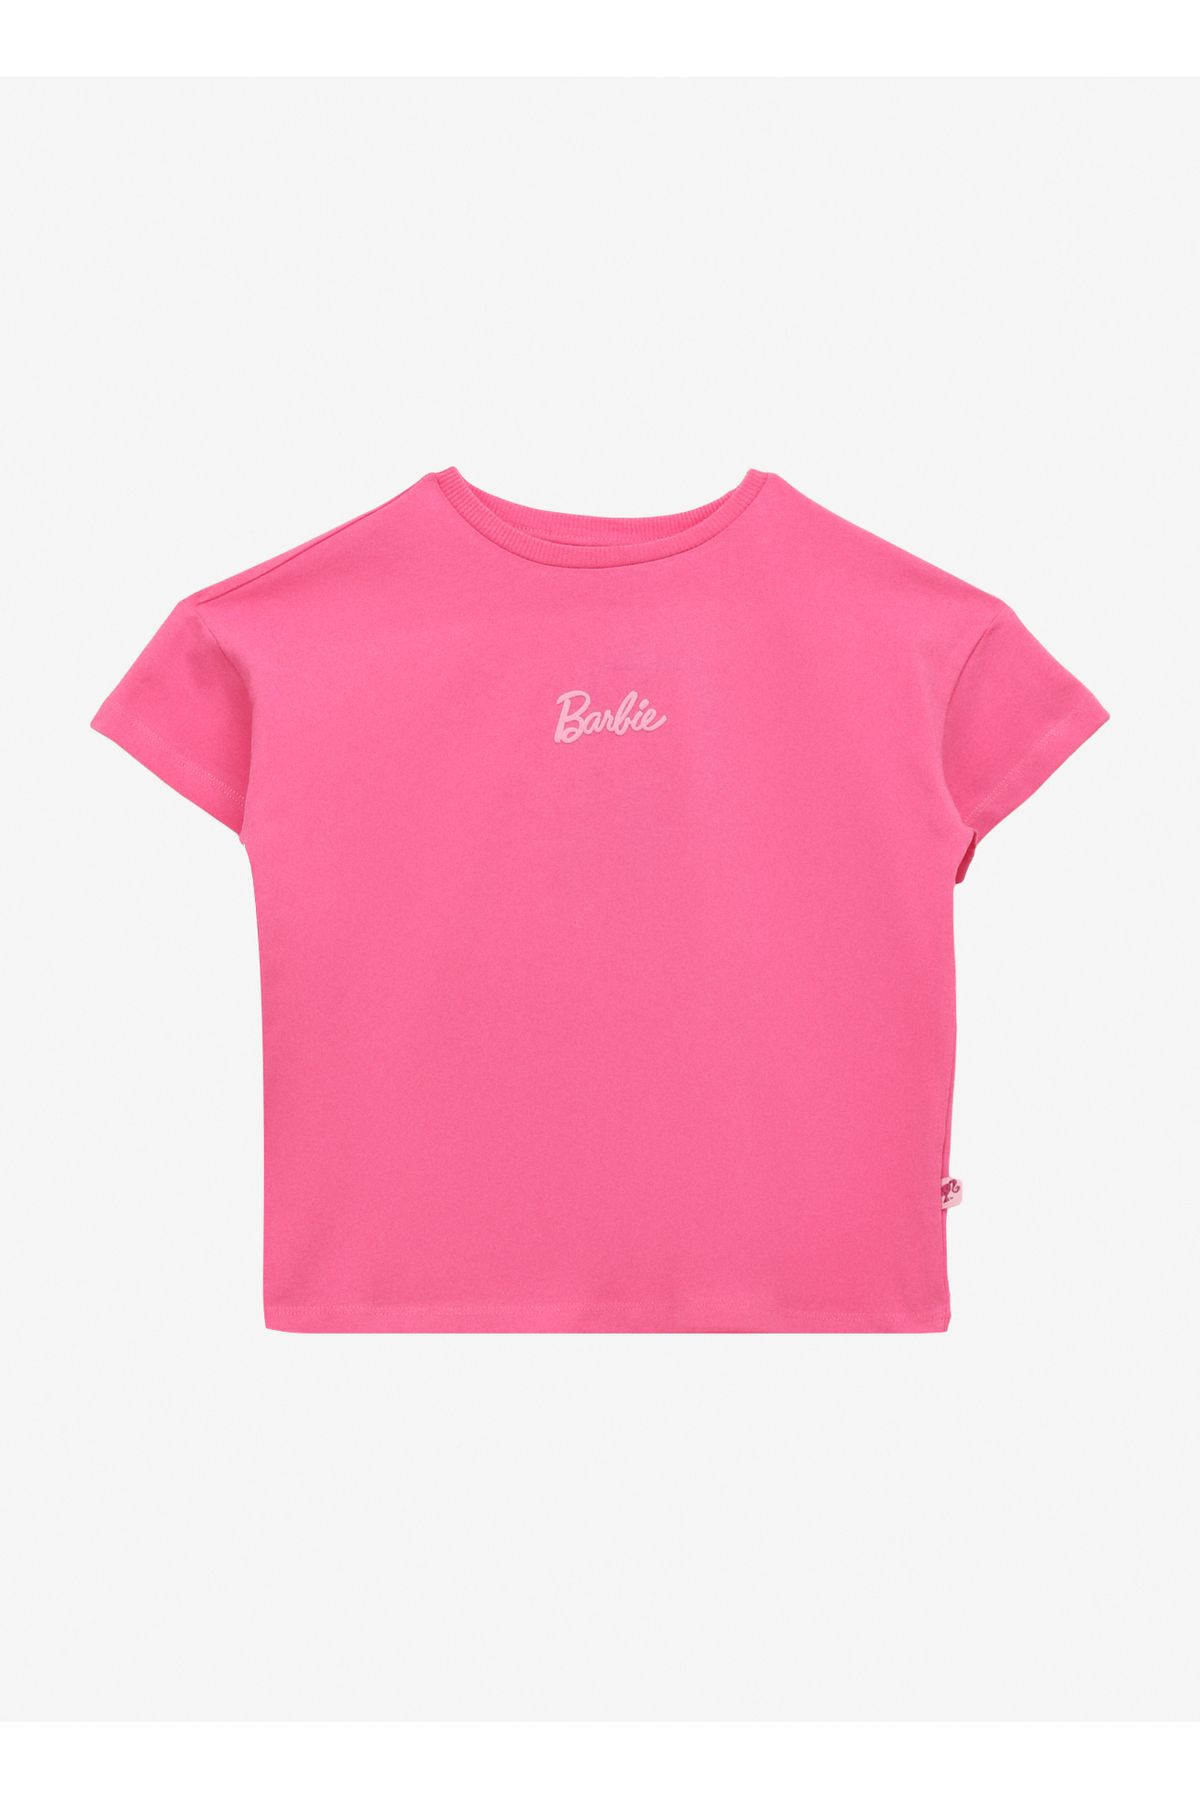 Barbie Baskılı Pembe Kız Çocuk T-Shirt BRB4SG-TST6009